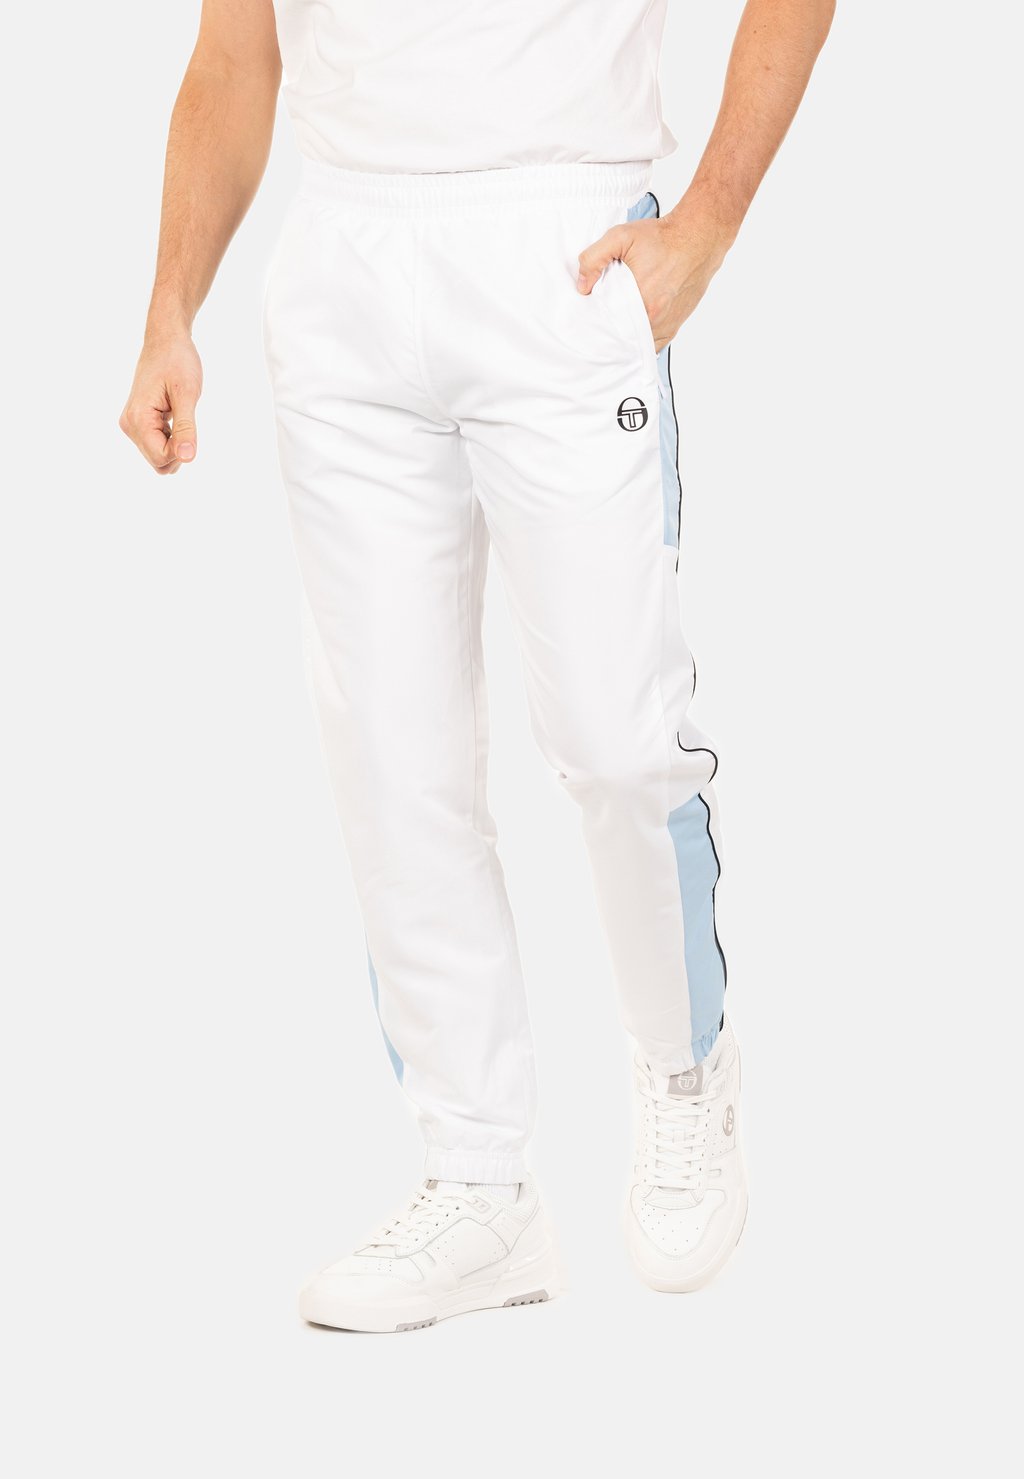 Брюки спортивные ABITA Sergio Tacchini, цвет white blue bell спортивные брюки abita pants sergio tacchini цвет noir